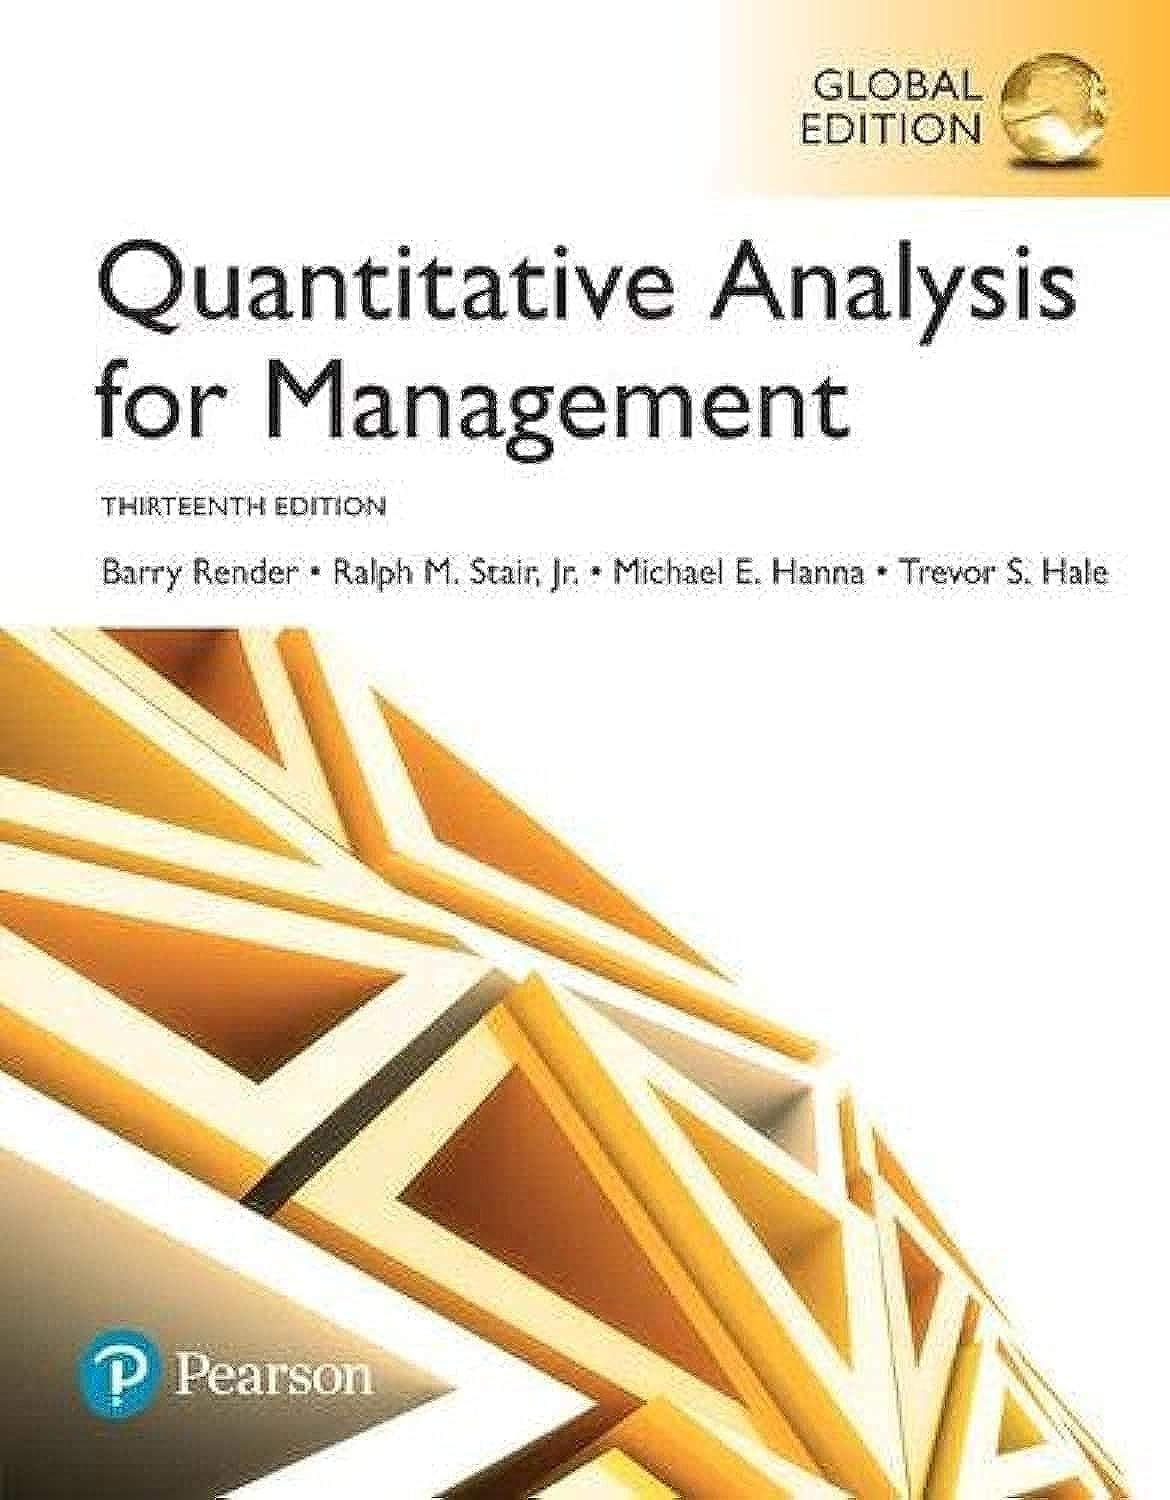 quantitative analysis for management 13th global edition barry render, ralph m. stair, michael hanna, trevor